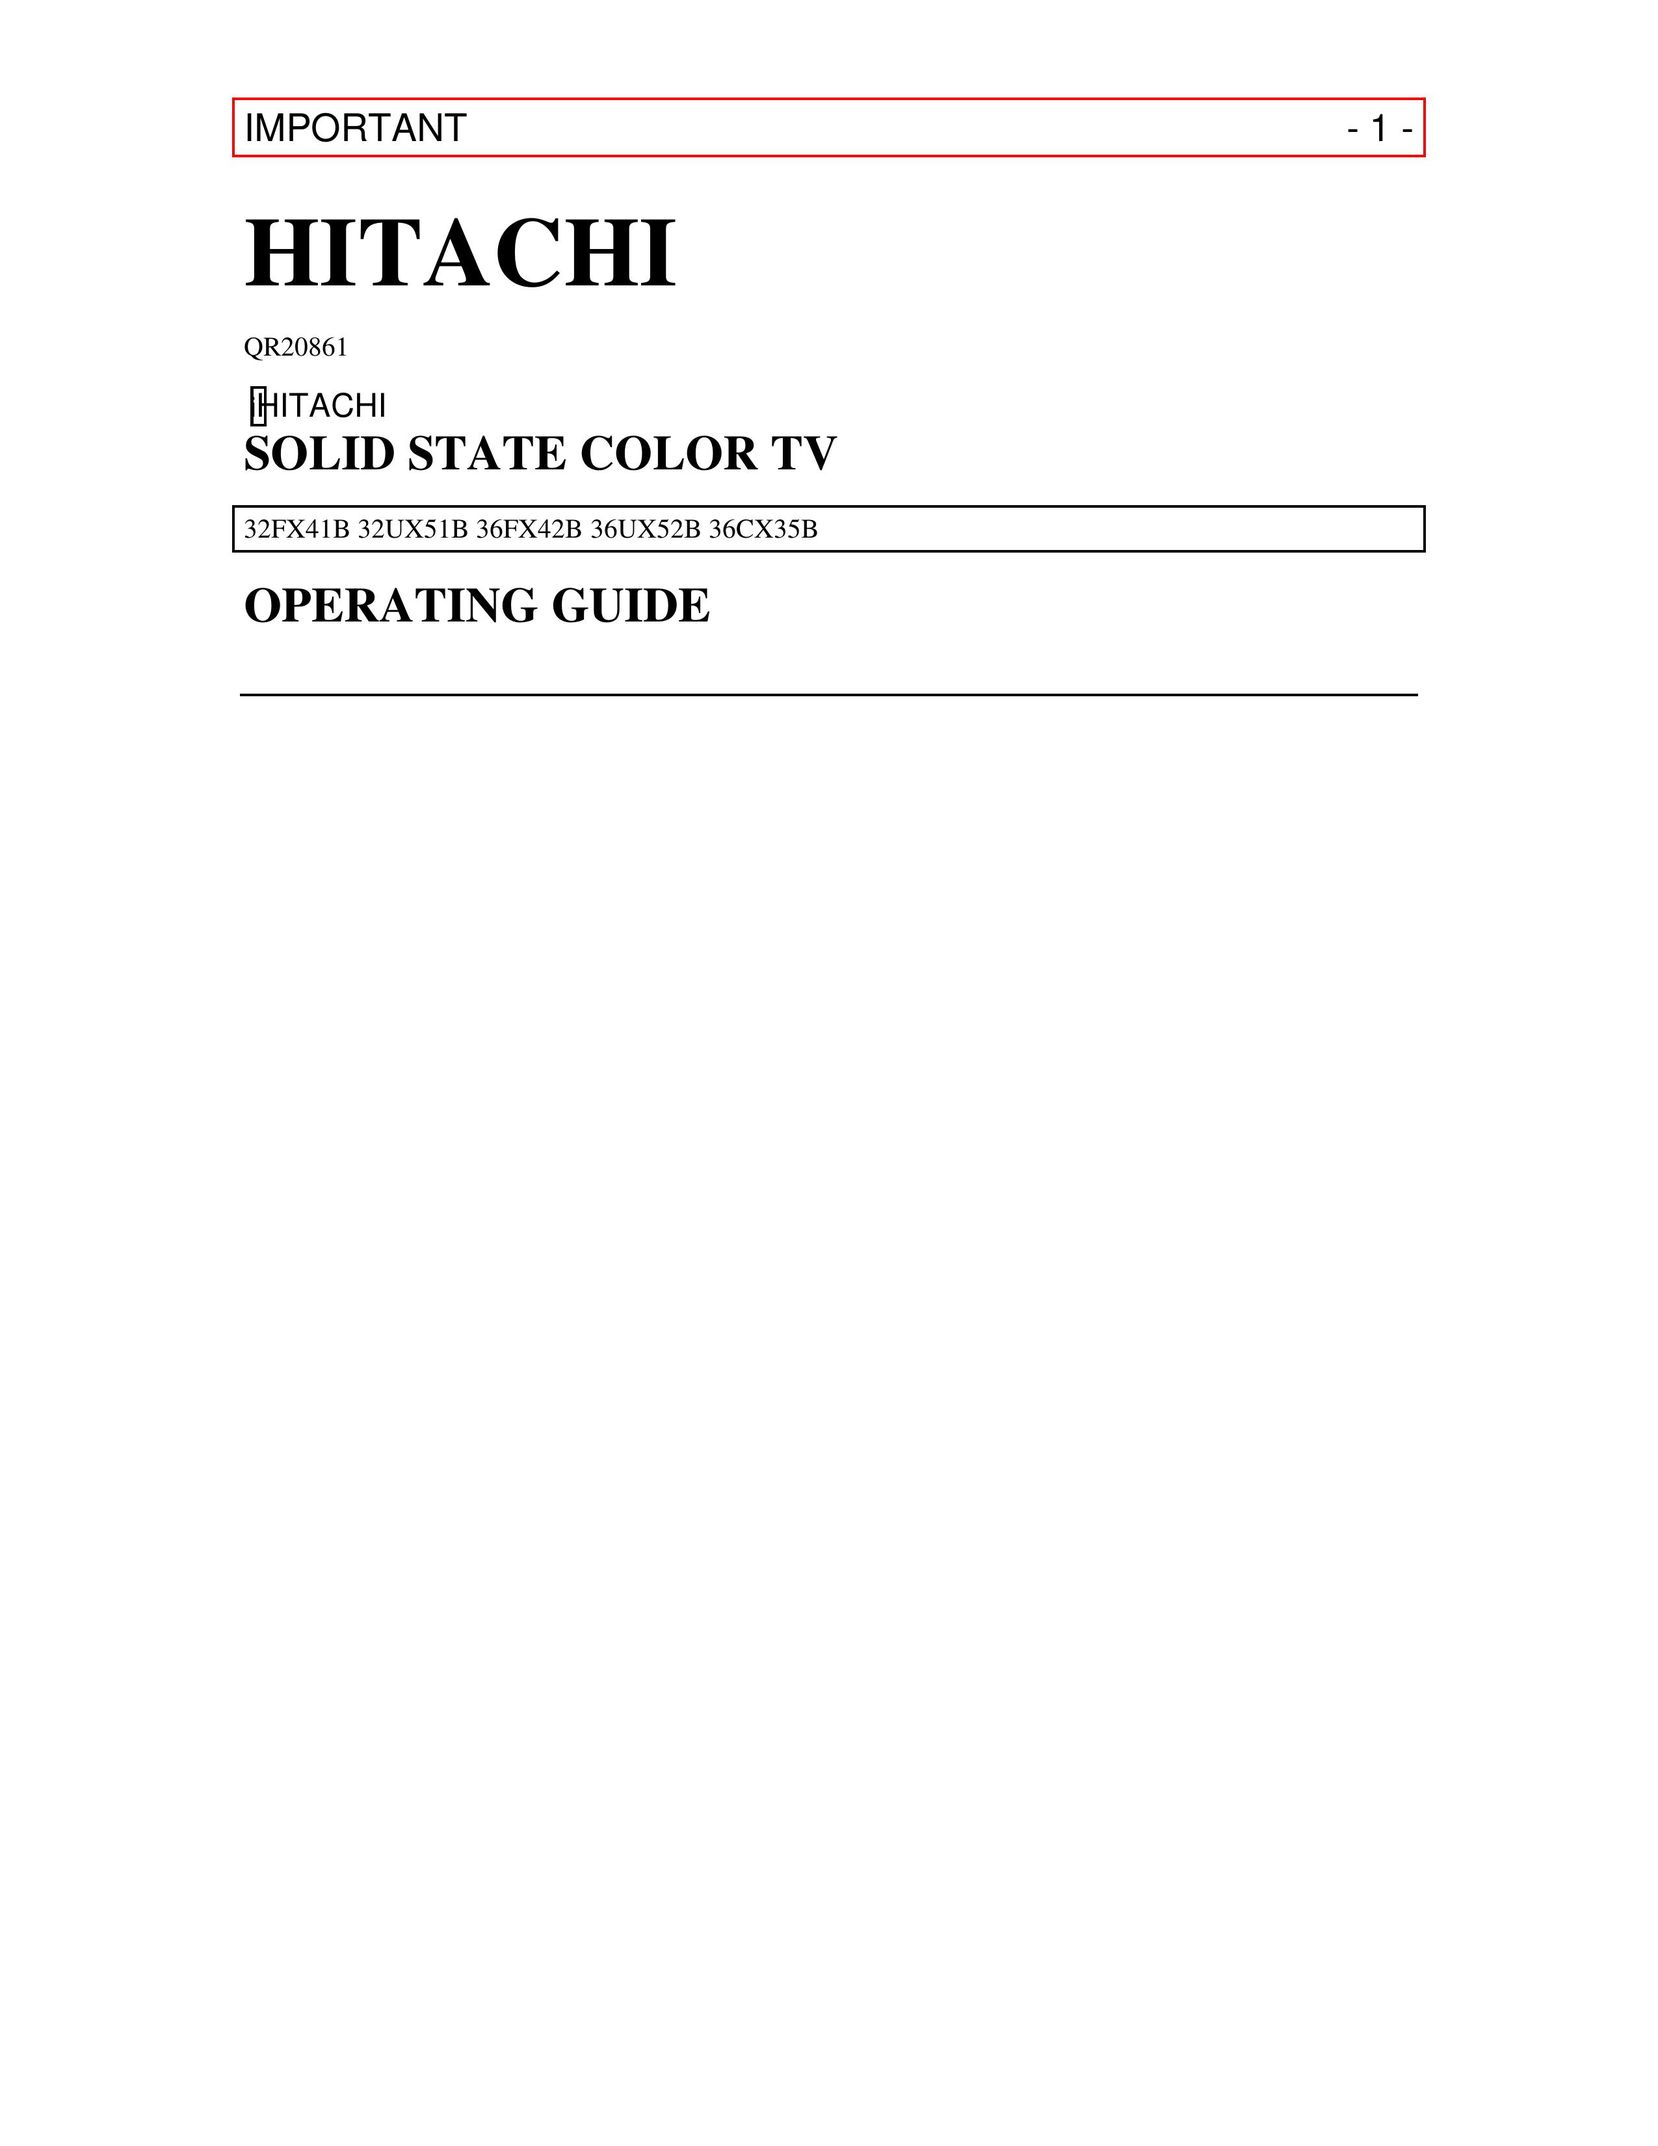 Hitachi 32FX41B, 32UX51B, 36FX42B, 36UX52B, 36CX35B CRT Television User Manual